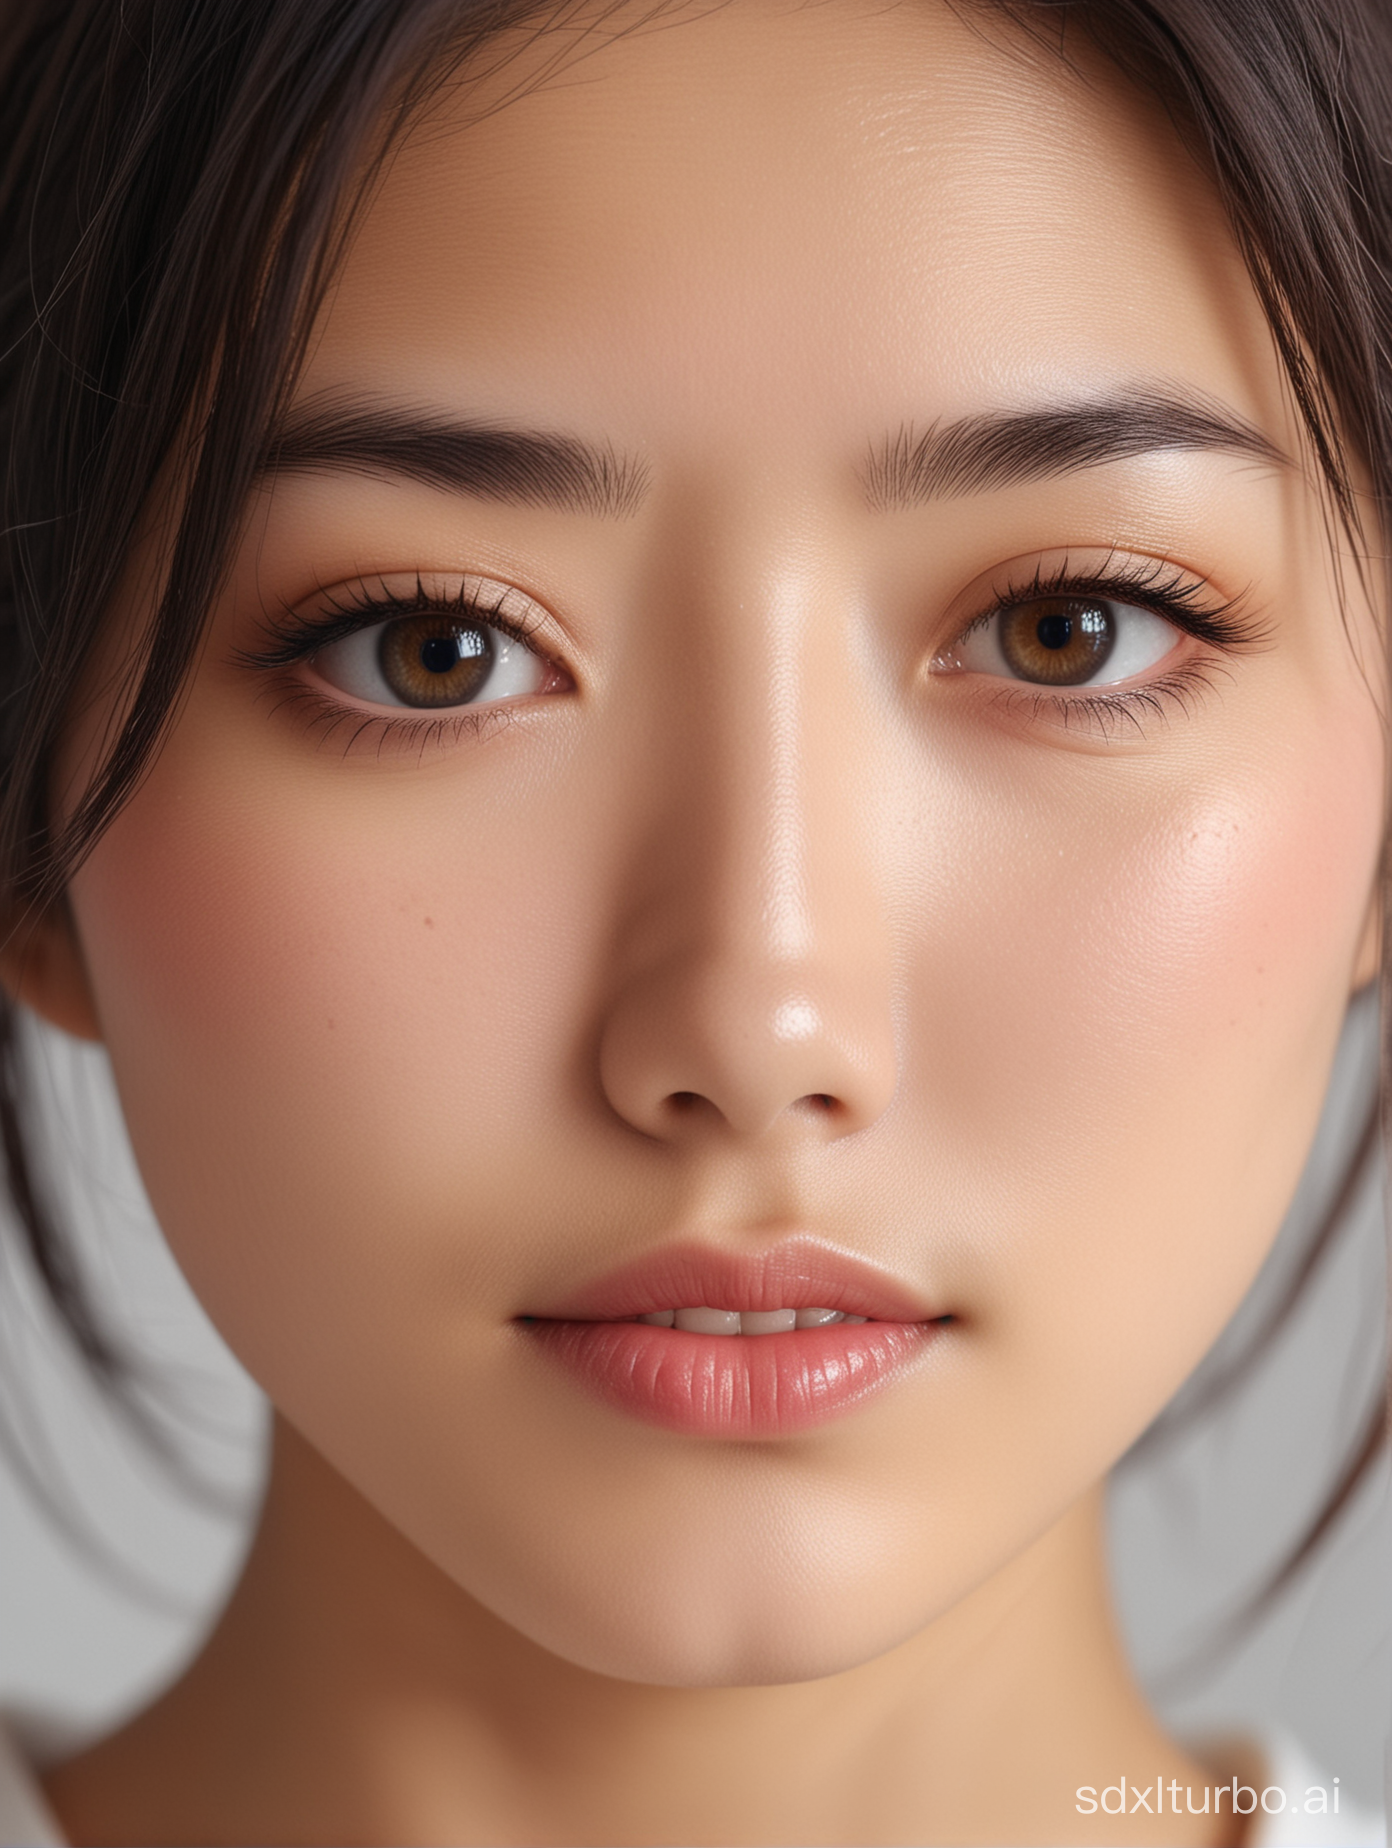 Young japanese girl face, beautiful face, perfect face, 4k, hi resolution, 